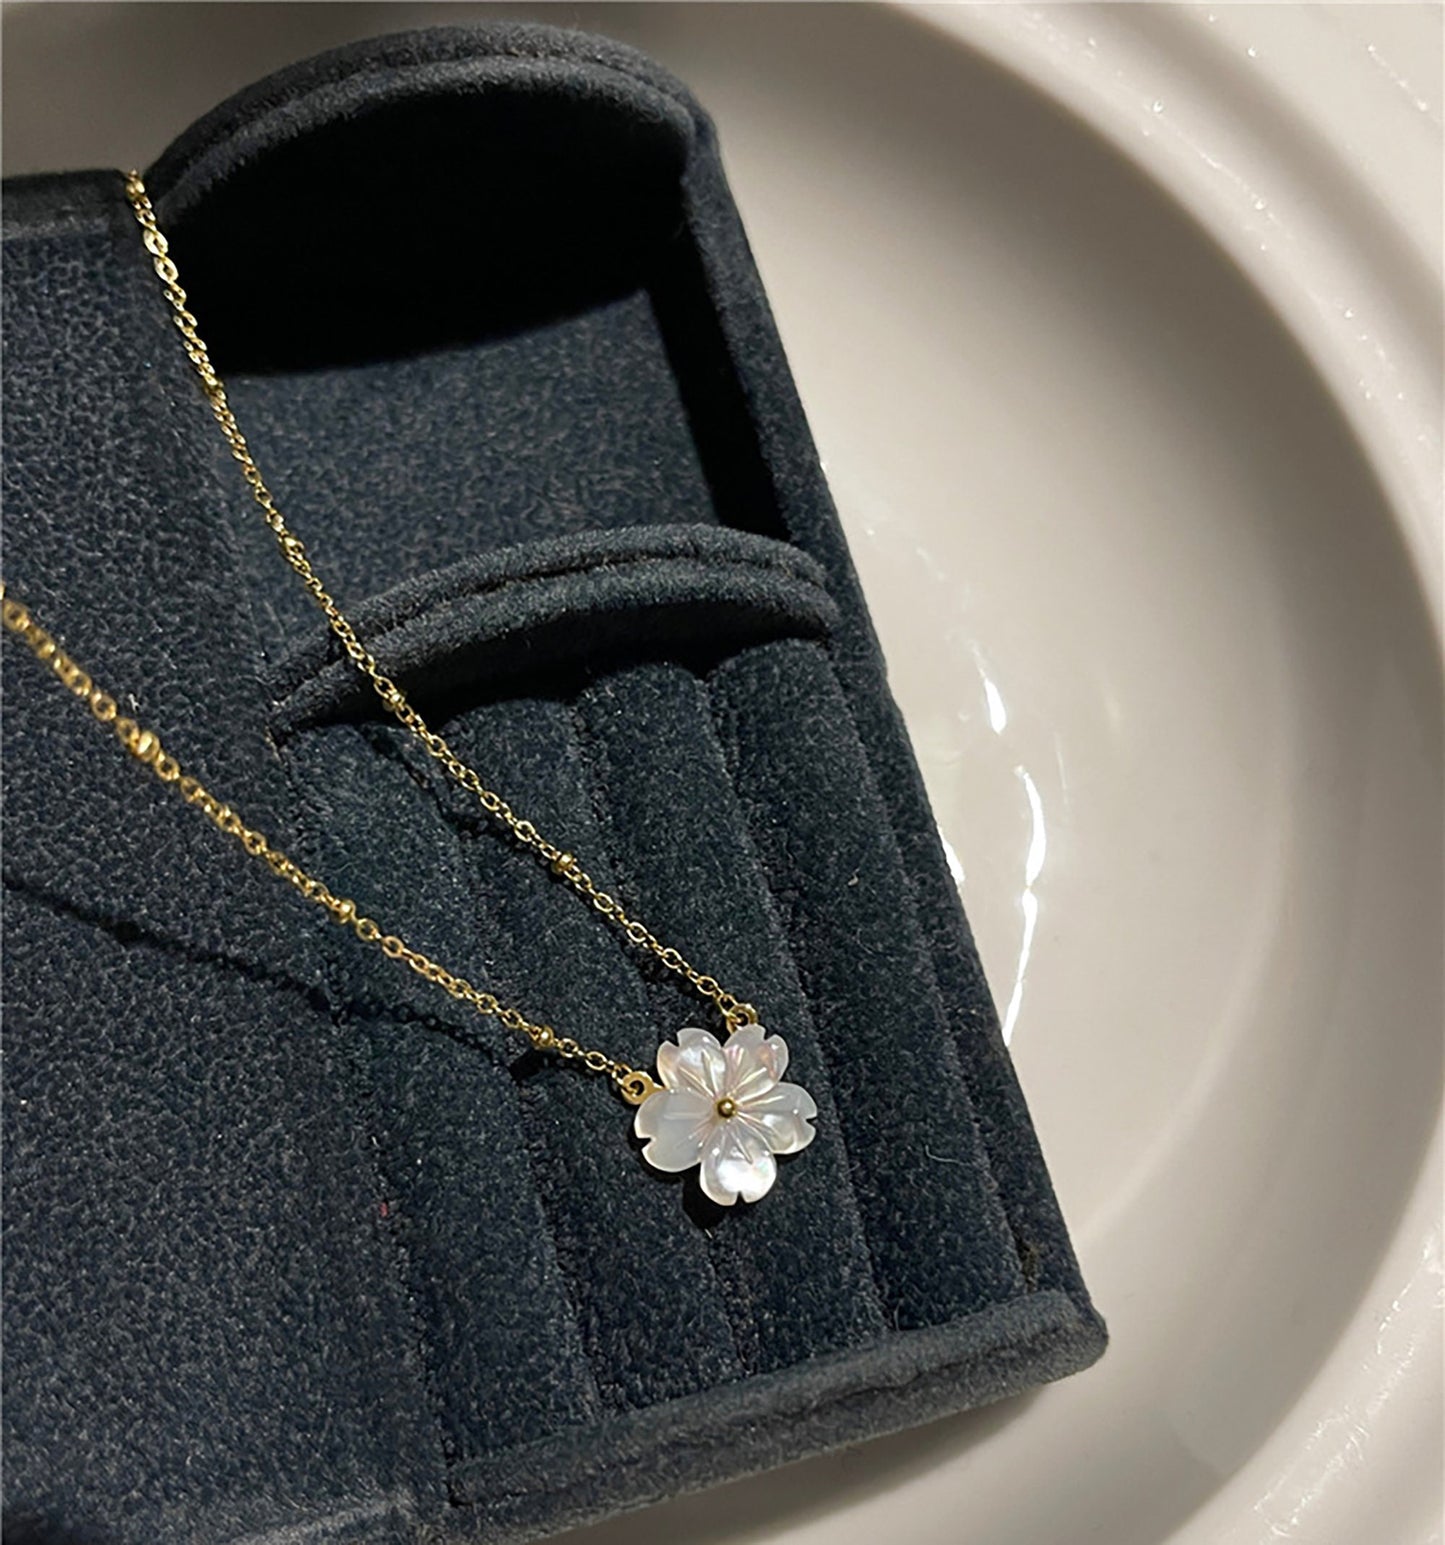 Titanium Gold Shell Flower Necklace, Non Tarnish, Implant Grade Titanium Waterproof, Vintage Style, Minimal